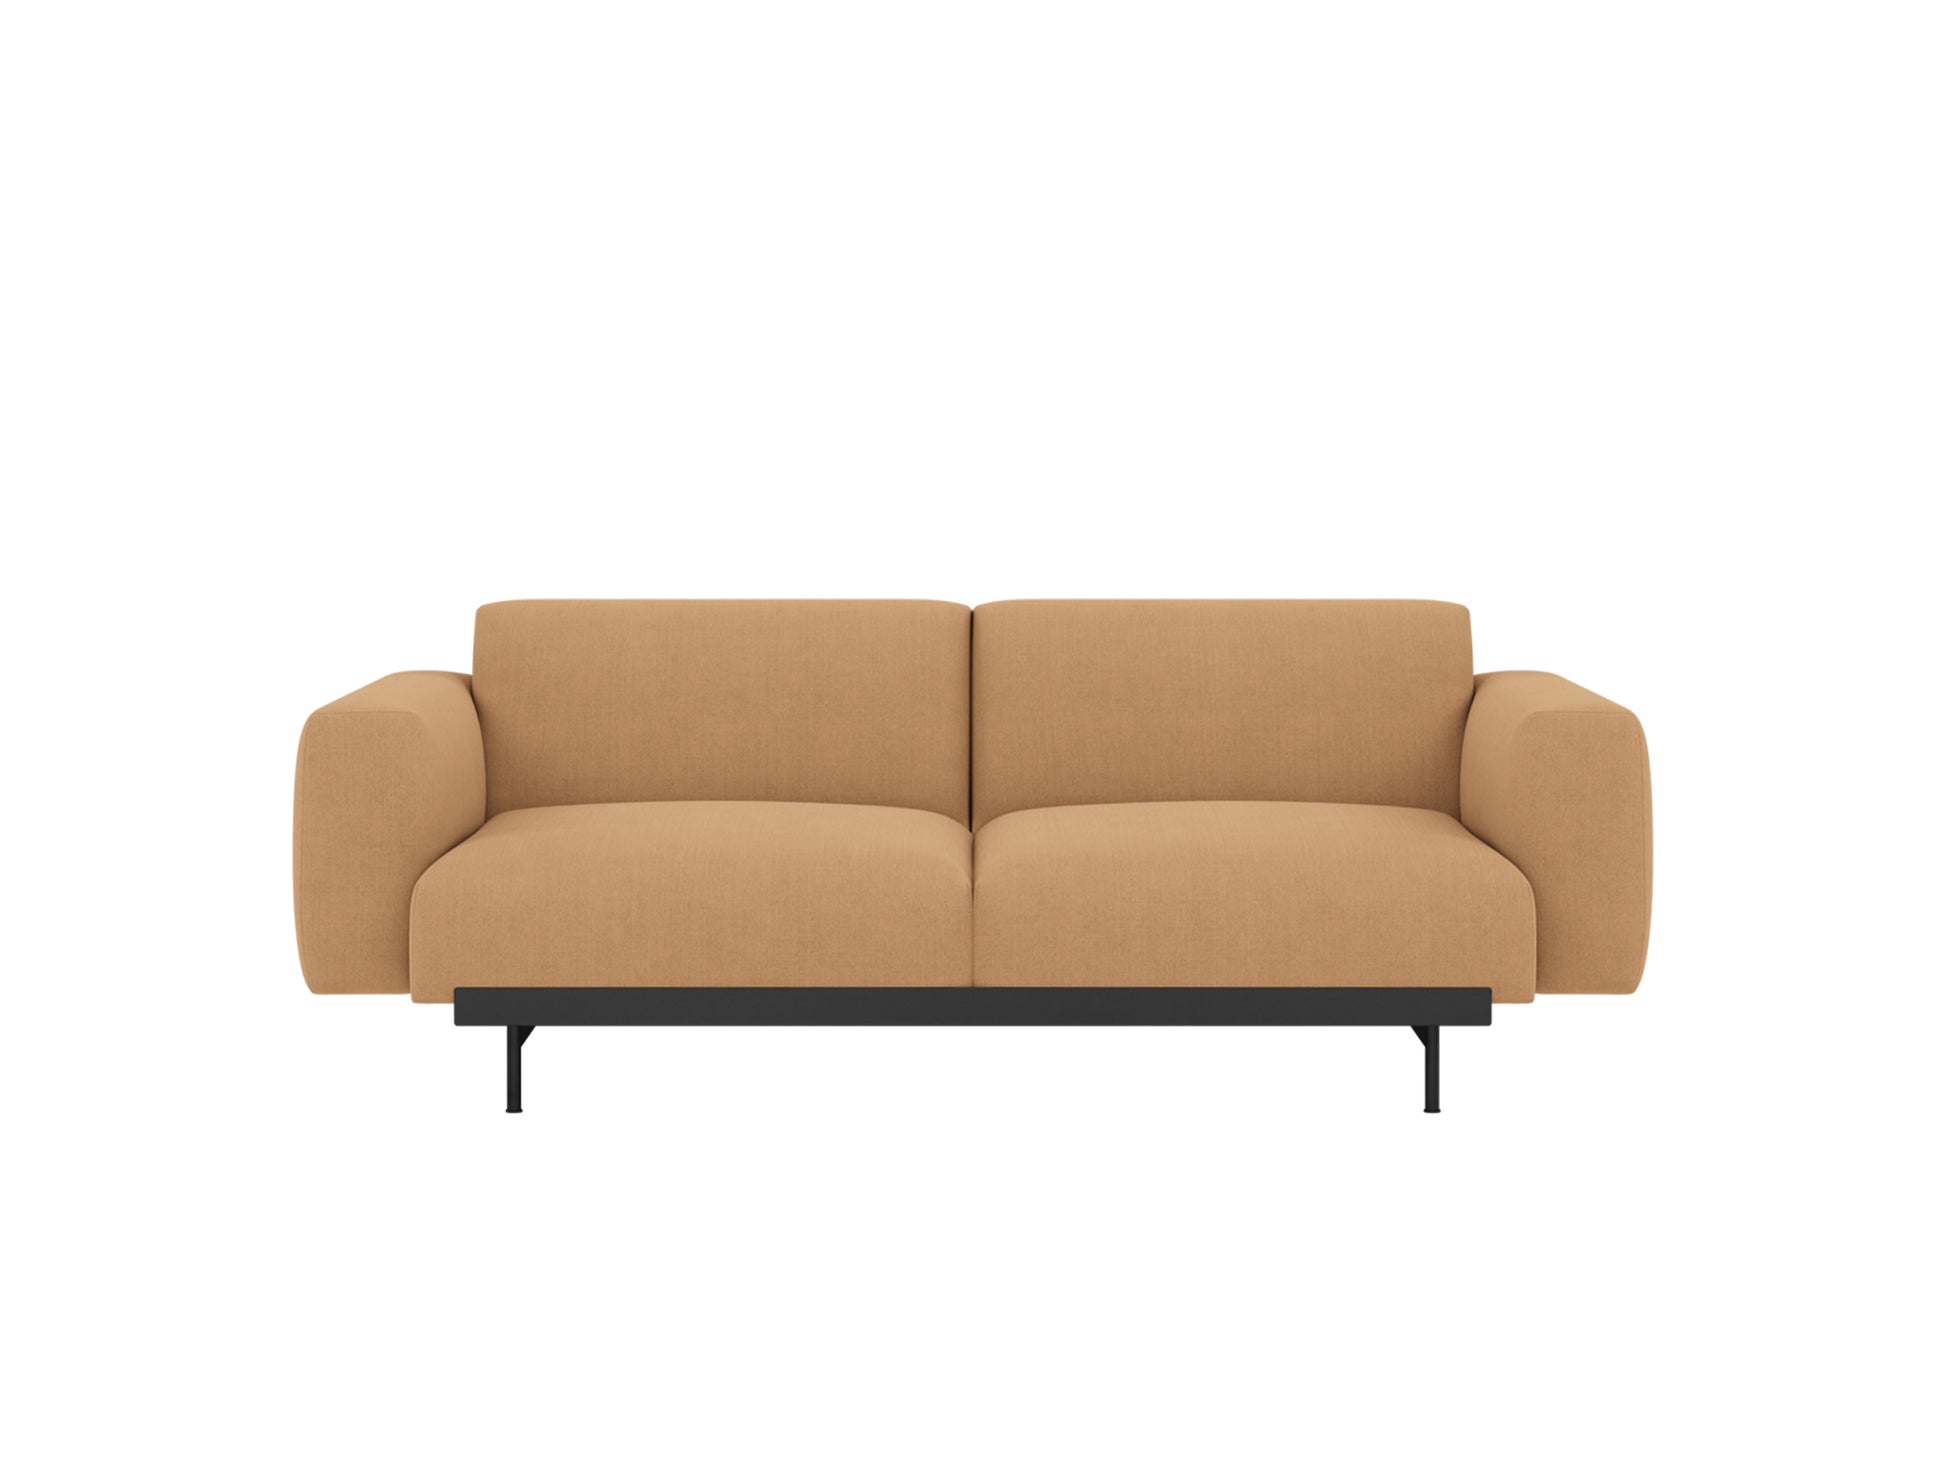 In Situ 2-Seater Modular Sofa by Muuto - Configuration 1 / Fiord 451